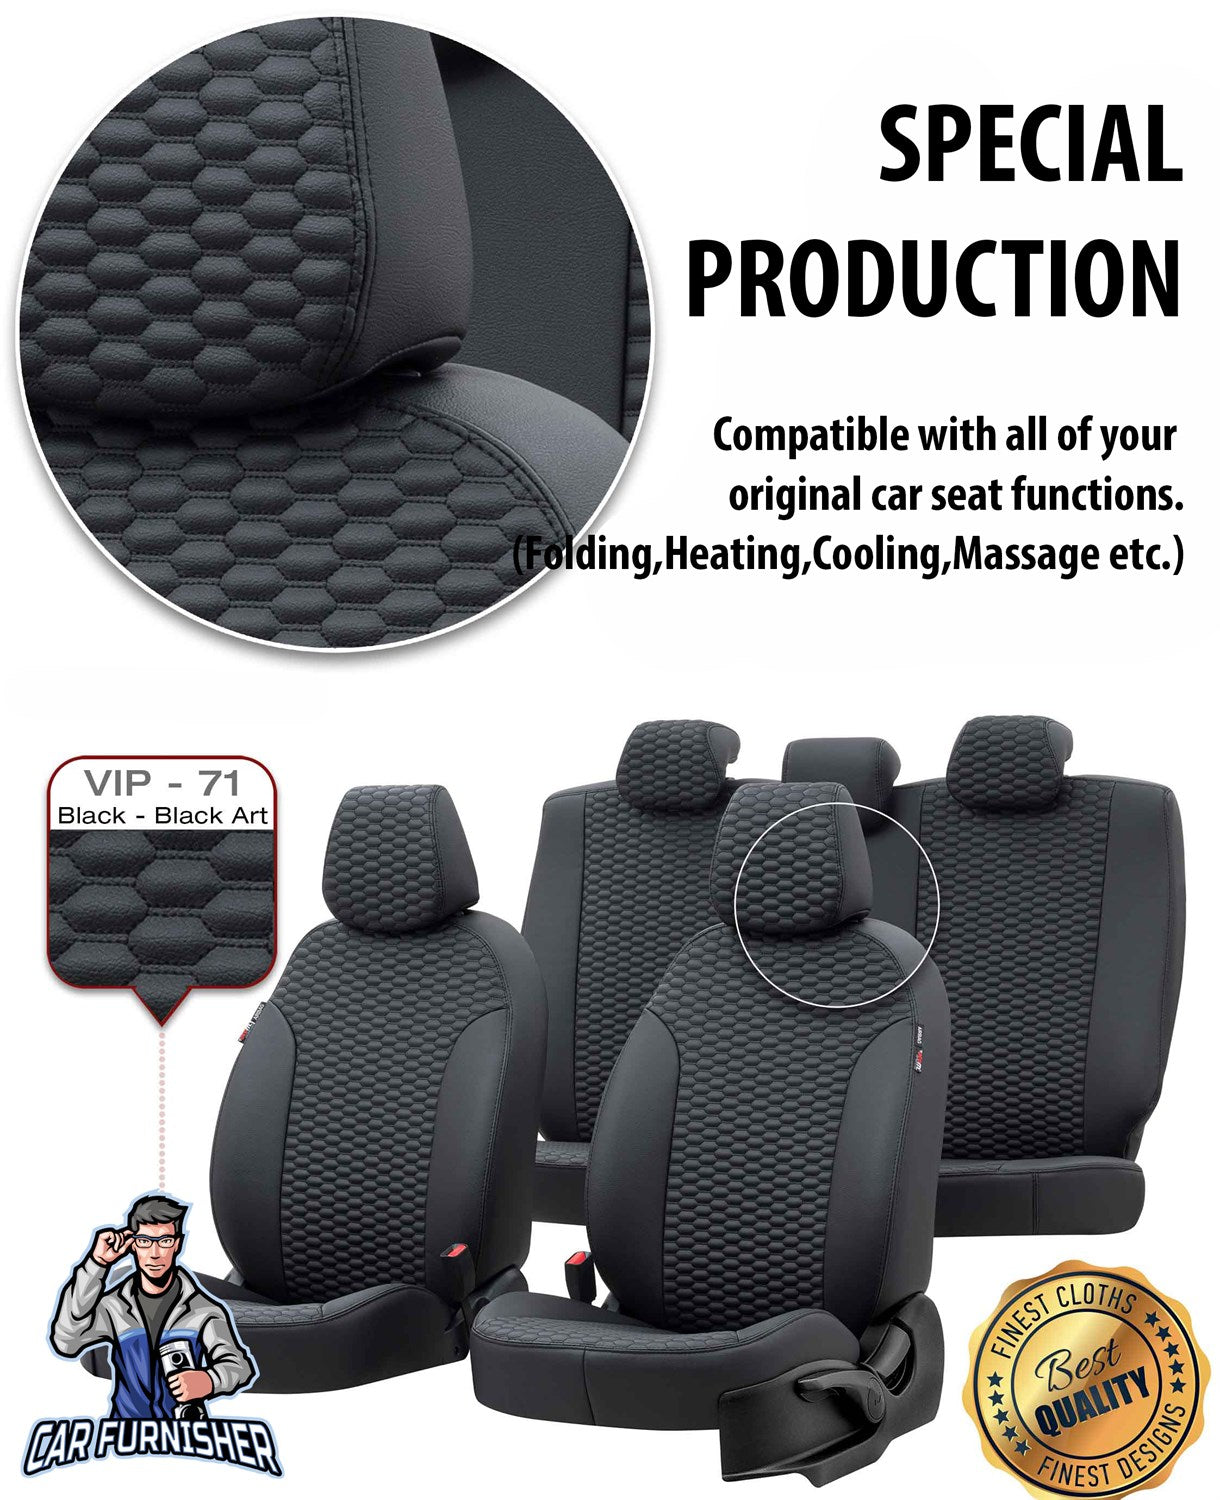 Mini Cooper Seat Covers Tokyo Leather Design Dark Gray Leather